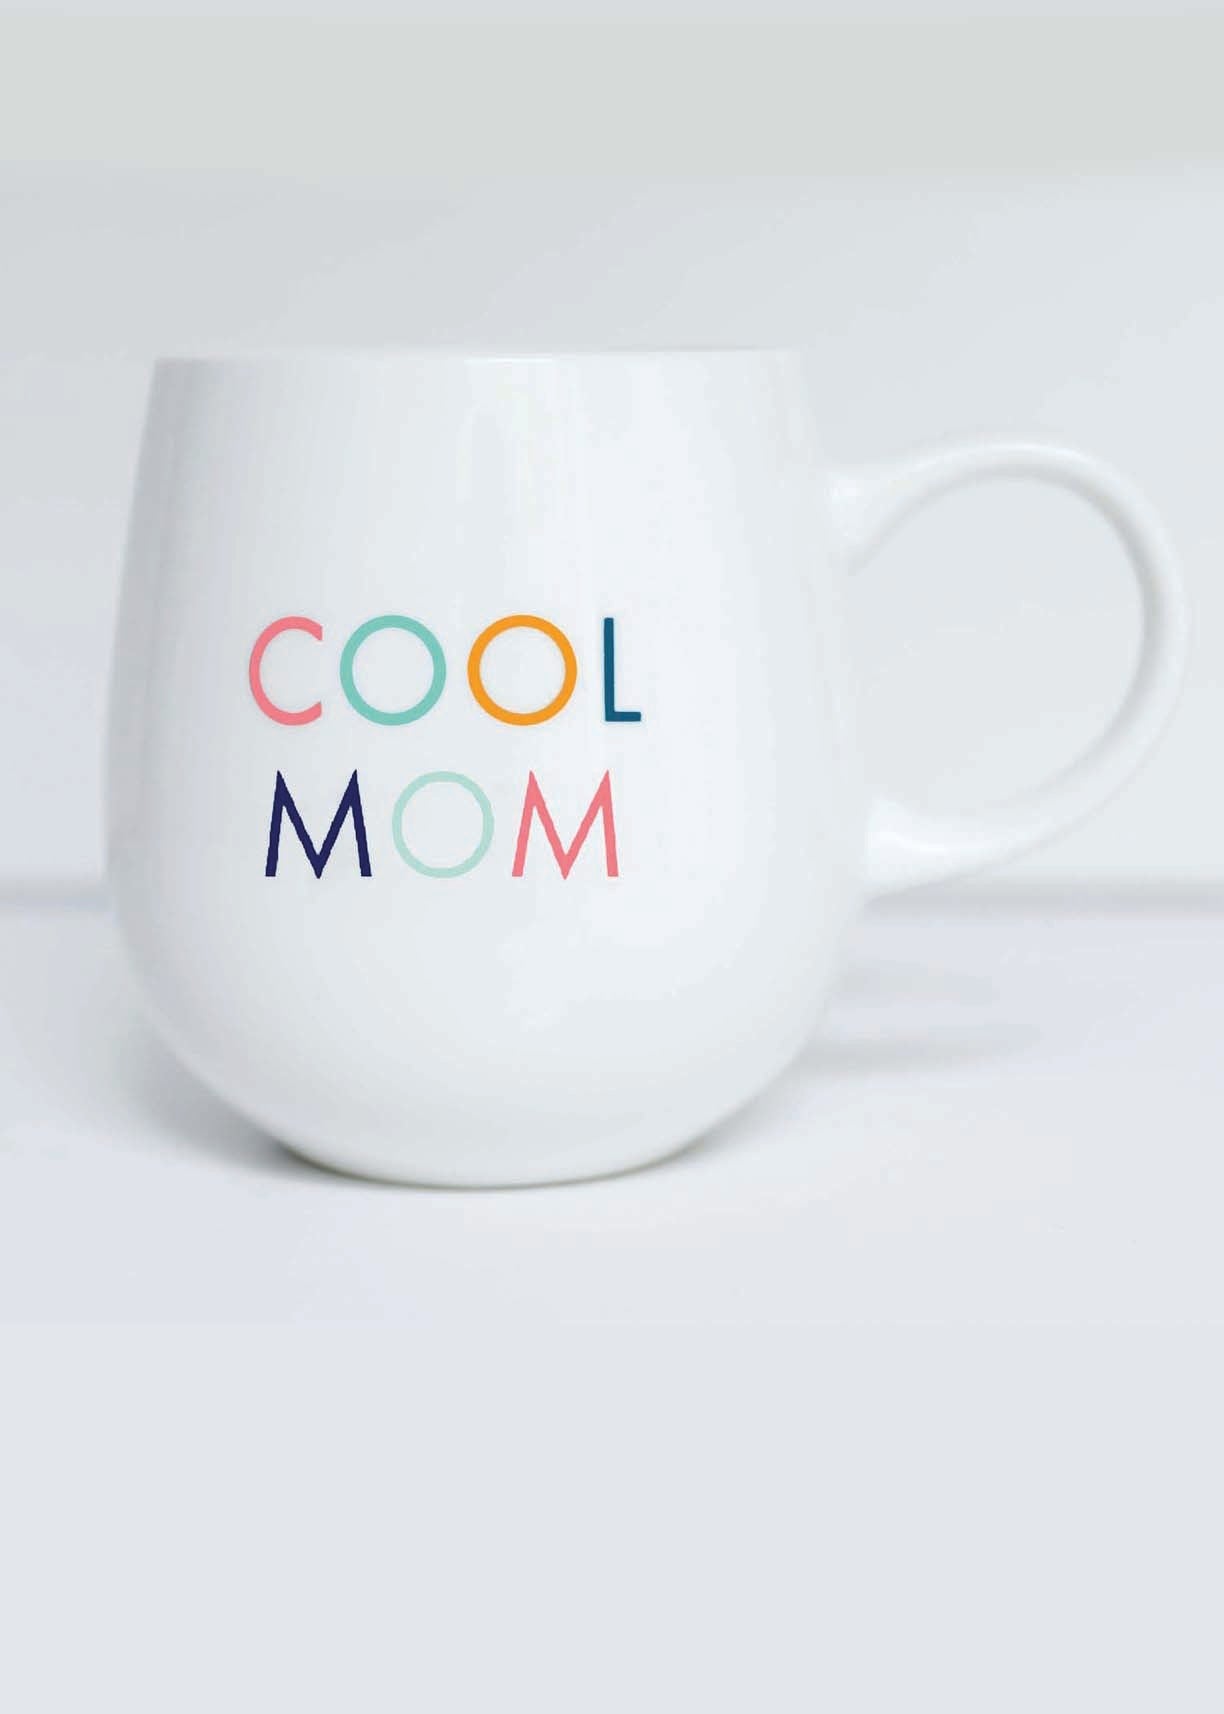 Cool Mom Ceramic Mug - FINAL SALE Home & Lifestyle